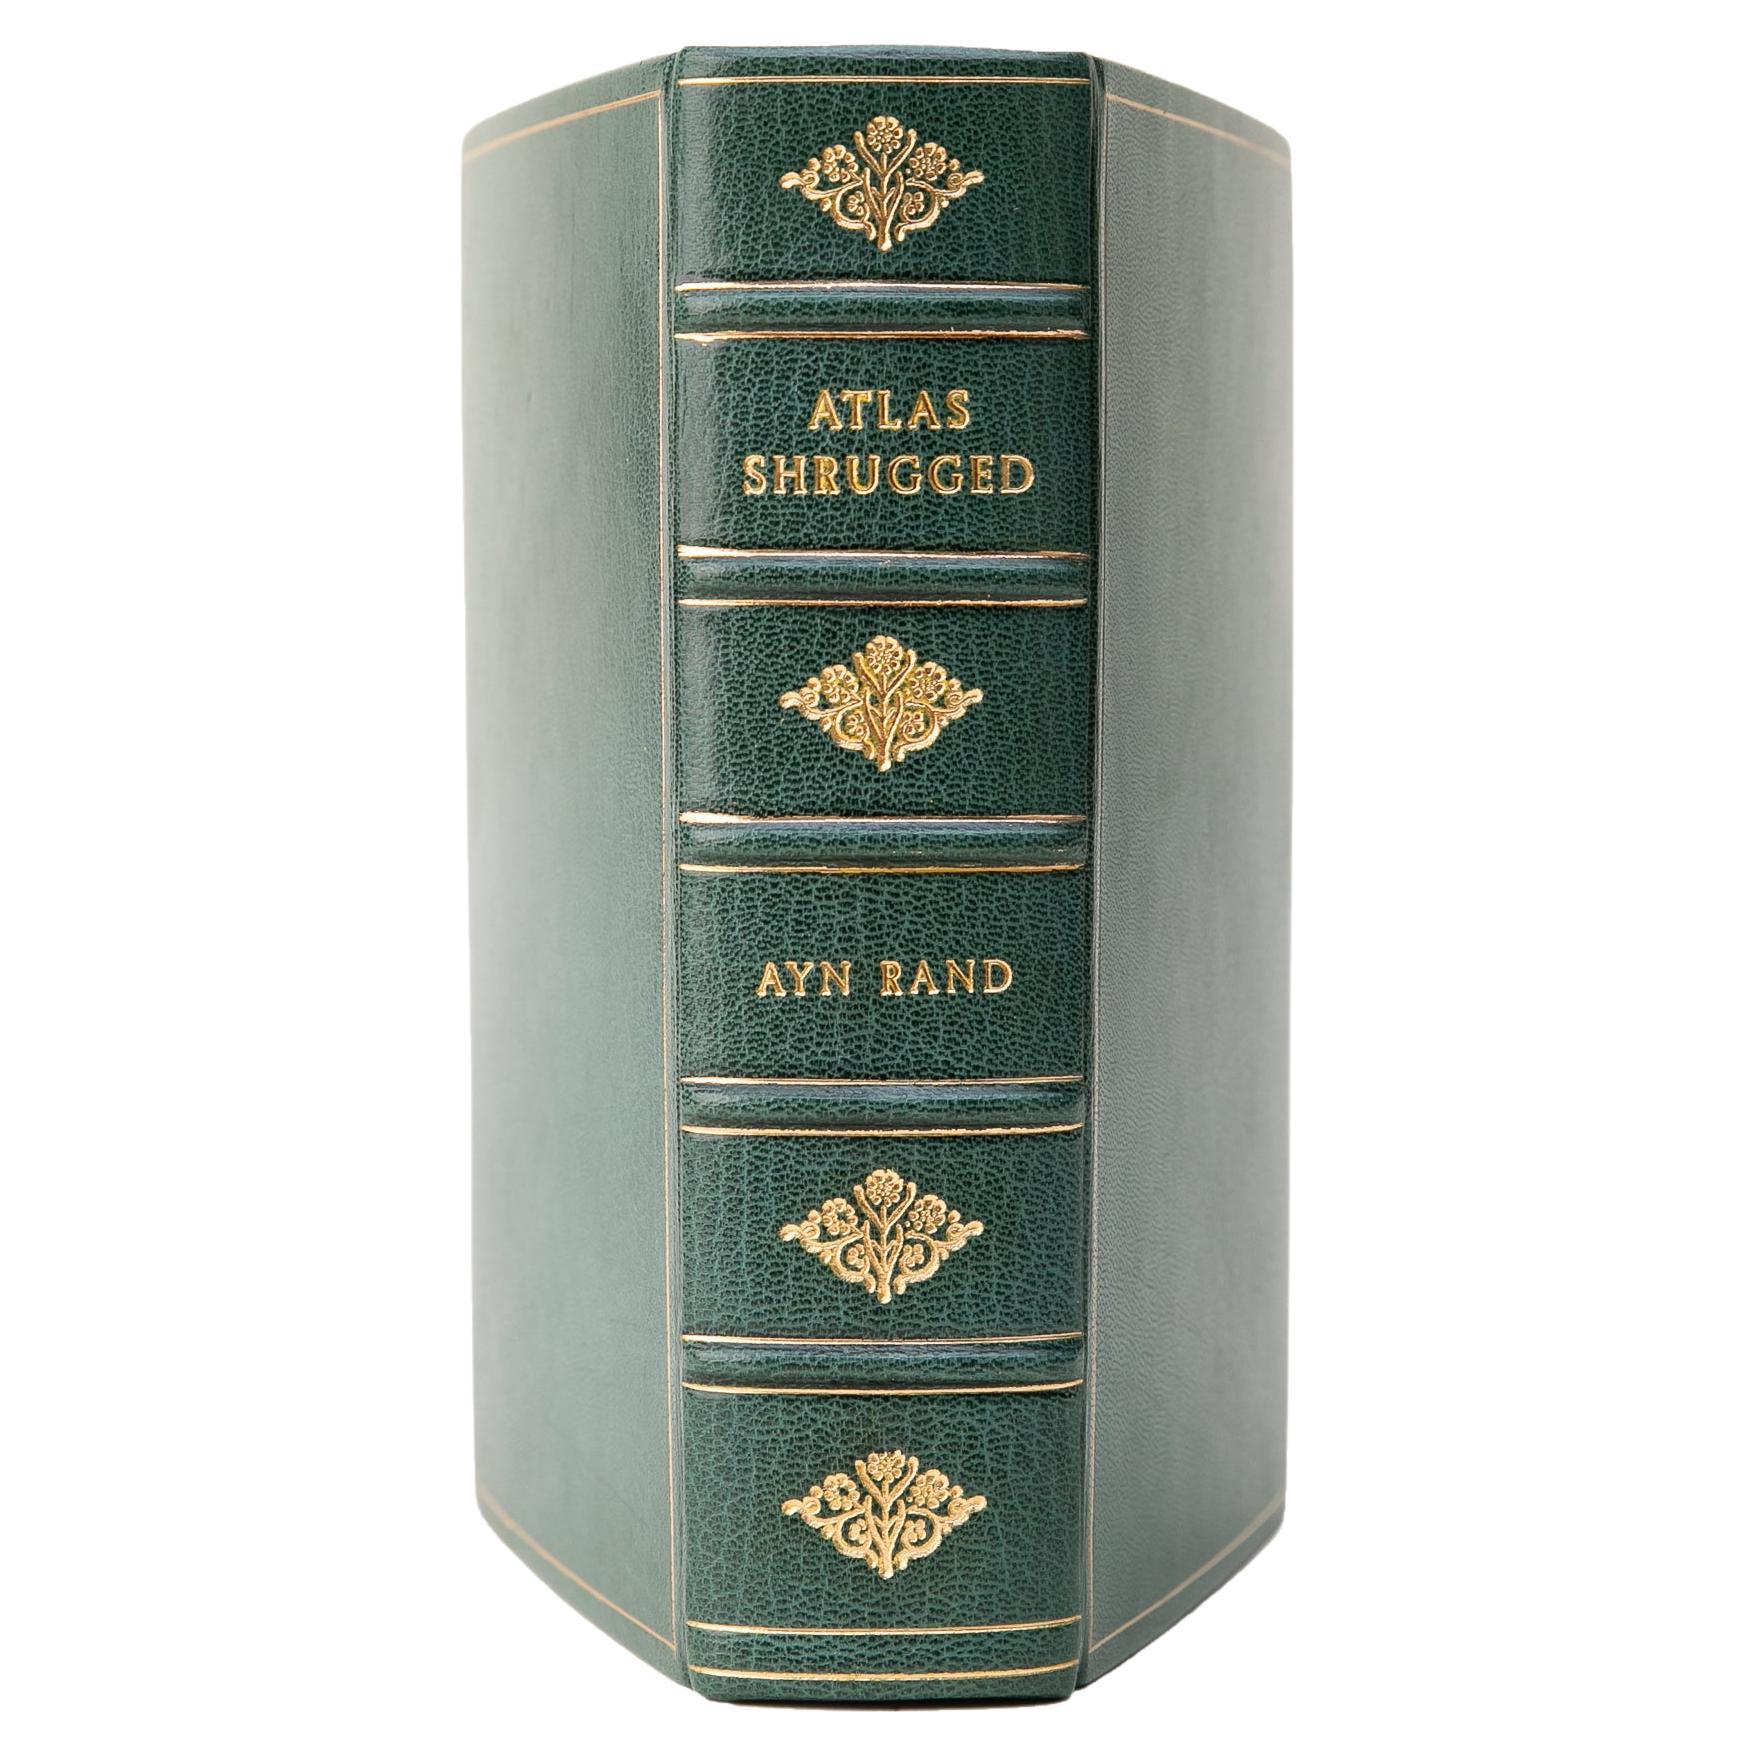 1 Volume. Ayn Rand, Atlas Shrugged. For Sale